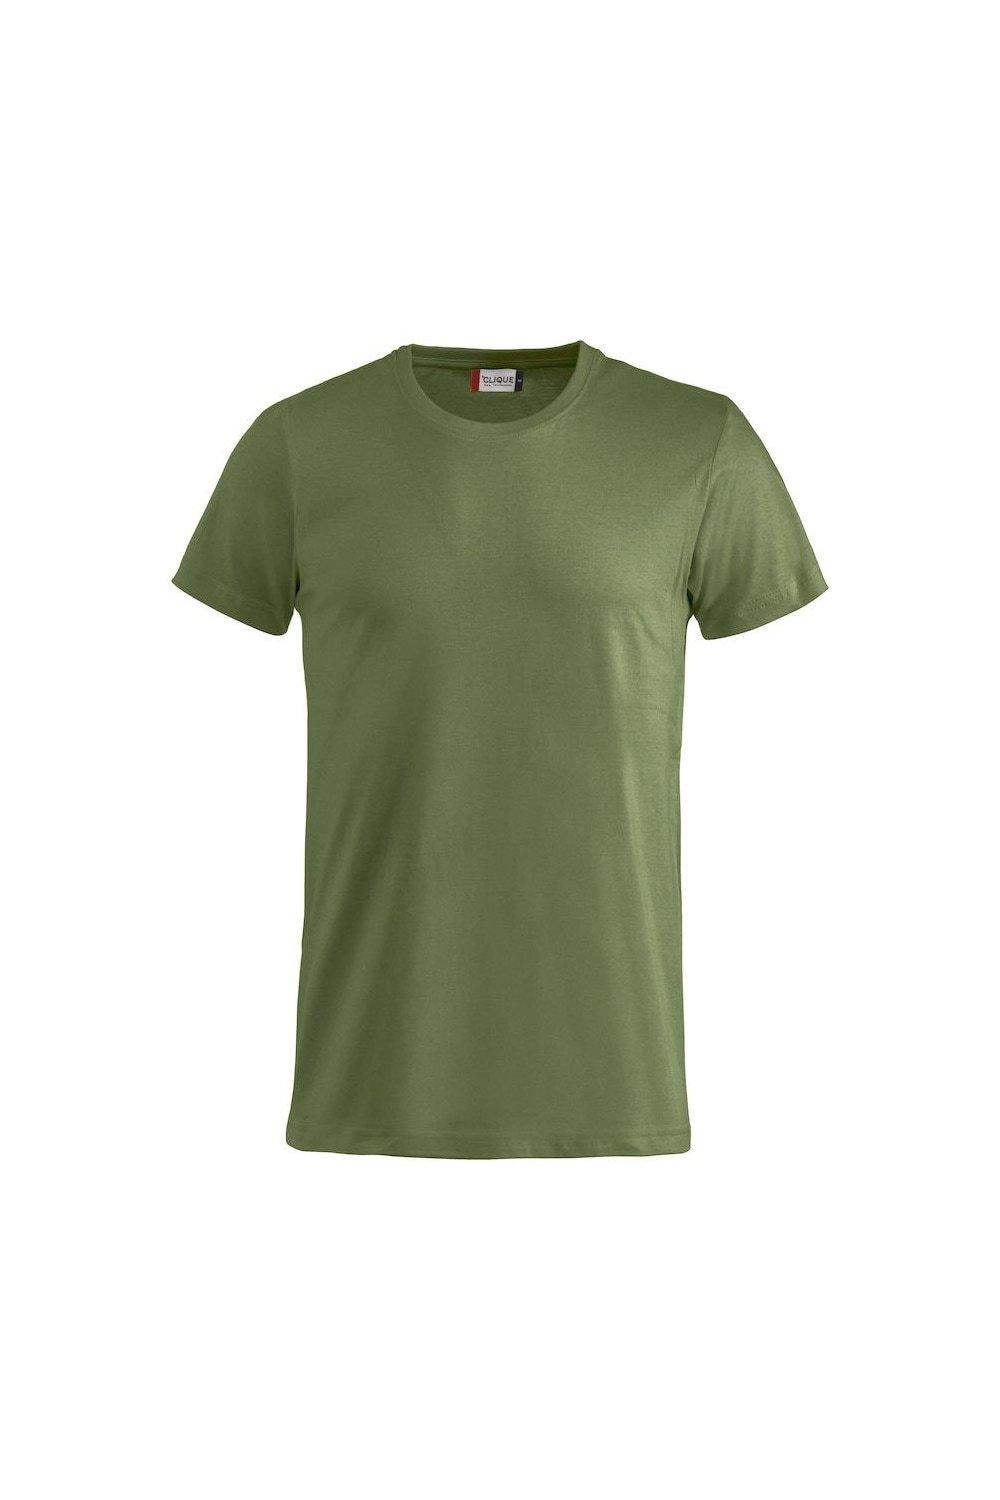 Базовая футболка Clique, зеленый футболка clique с надписью 42 размер